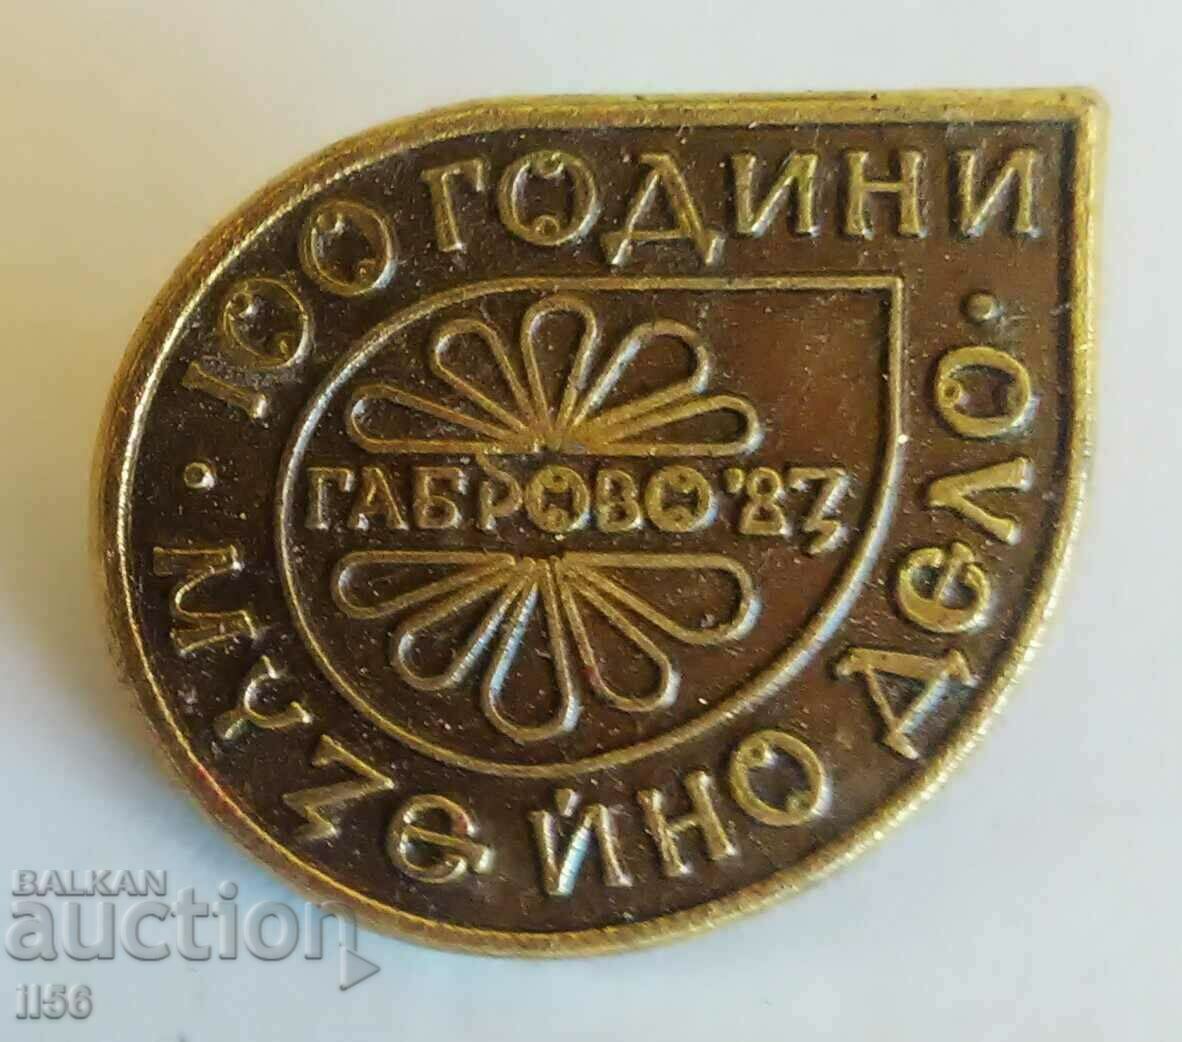 Badge - 100 years of museum work - Gabrovo